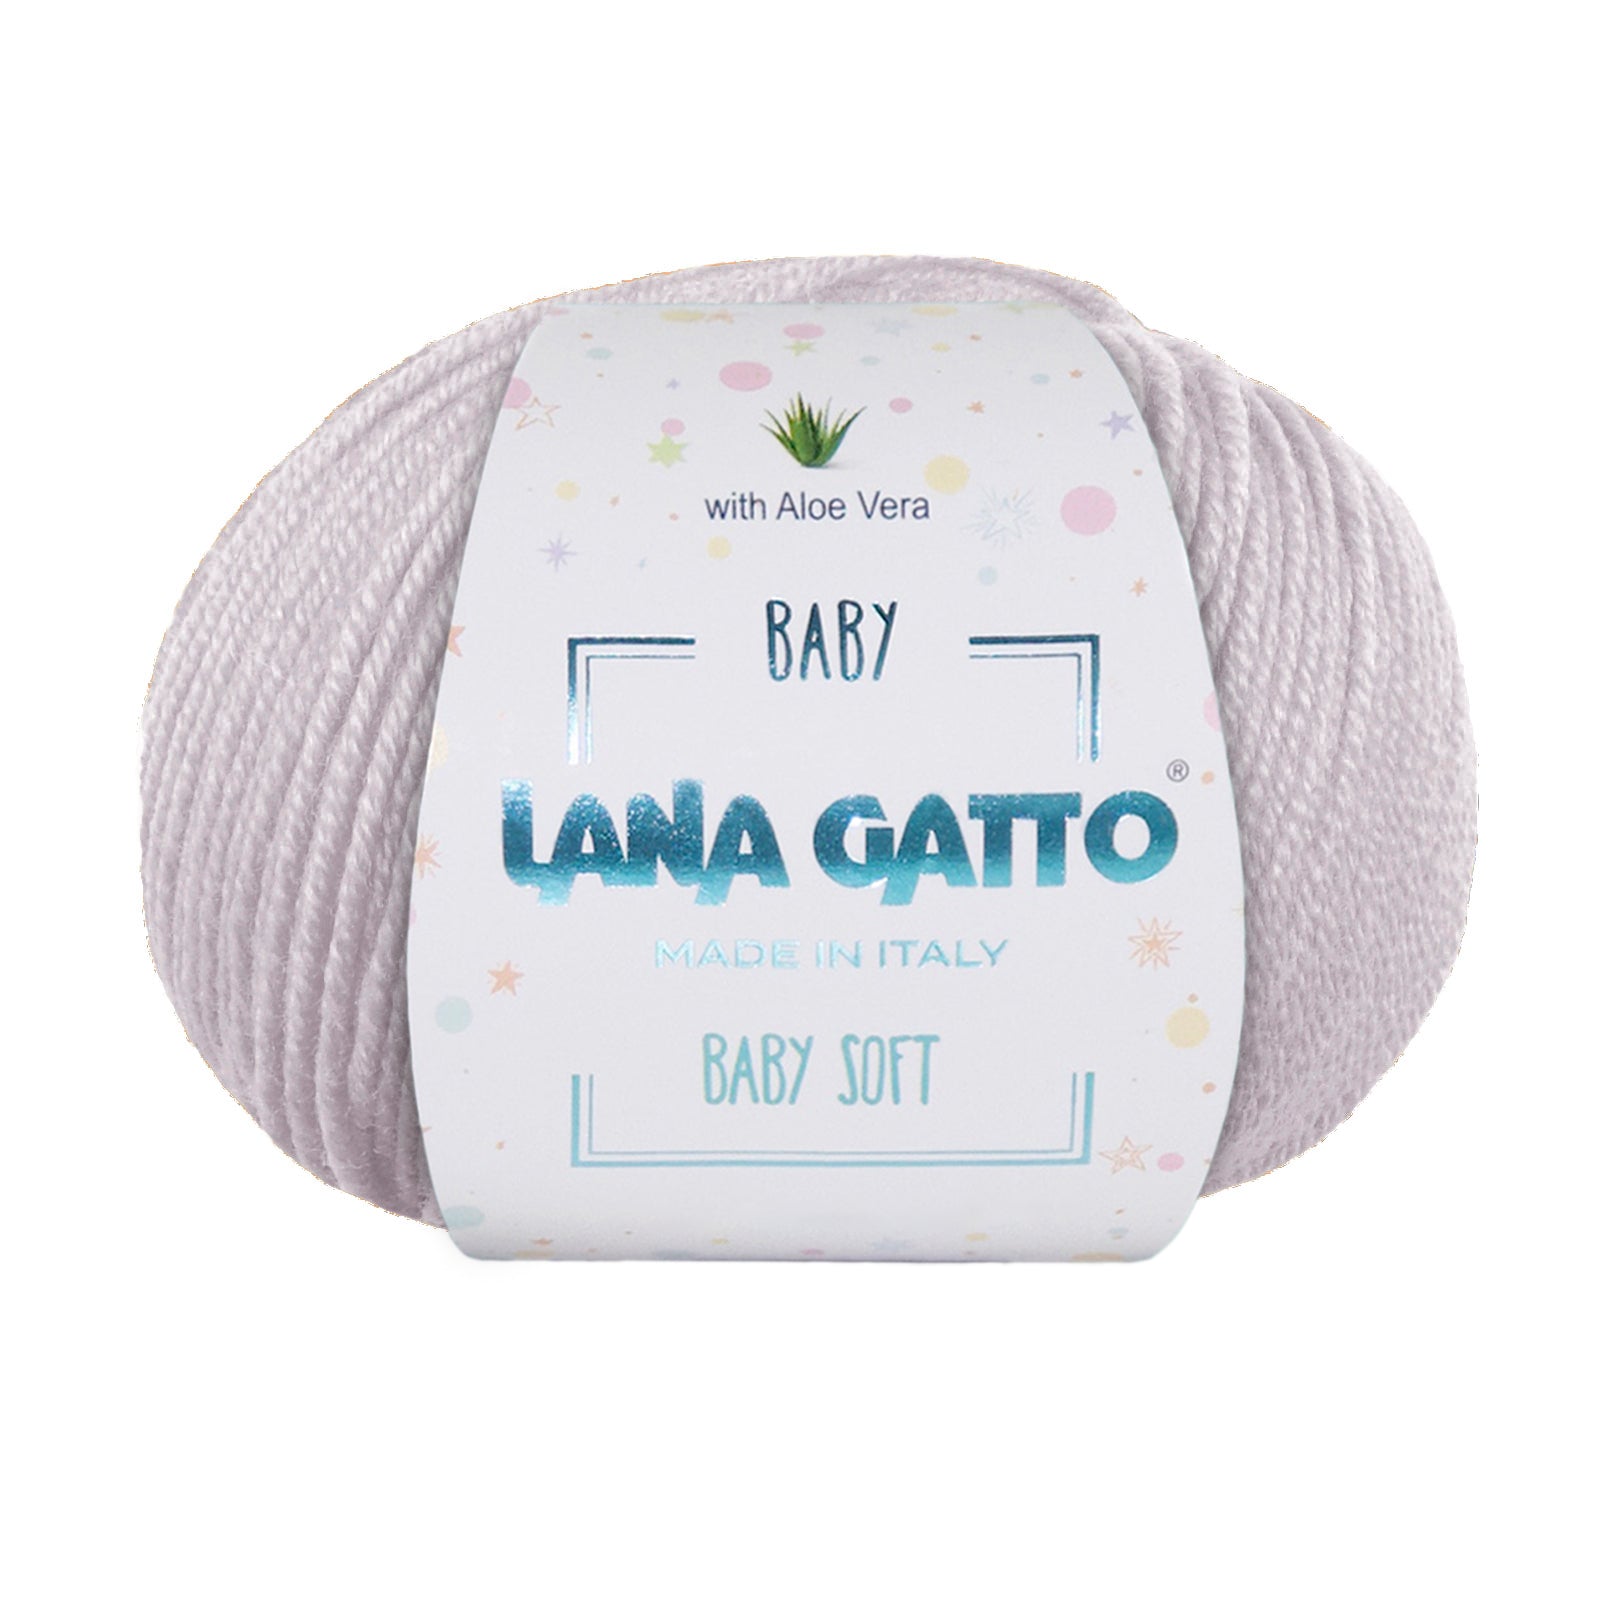 100% Pure Virgin Merino Wool Extrafine, Lana Gatto Baby Soft Line With Aloe Vera - Neutral Colors